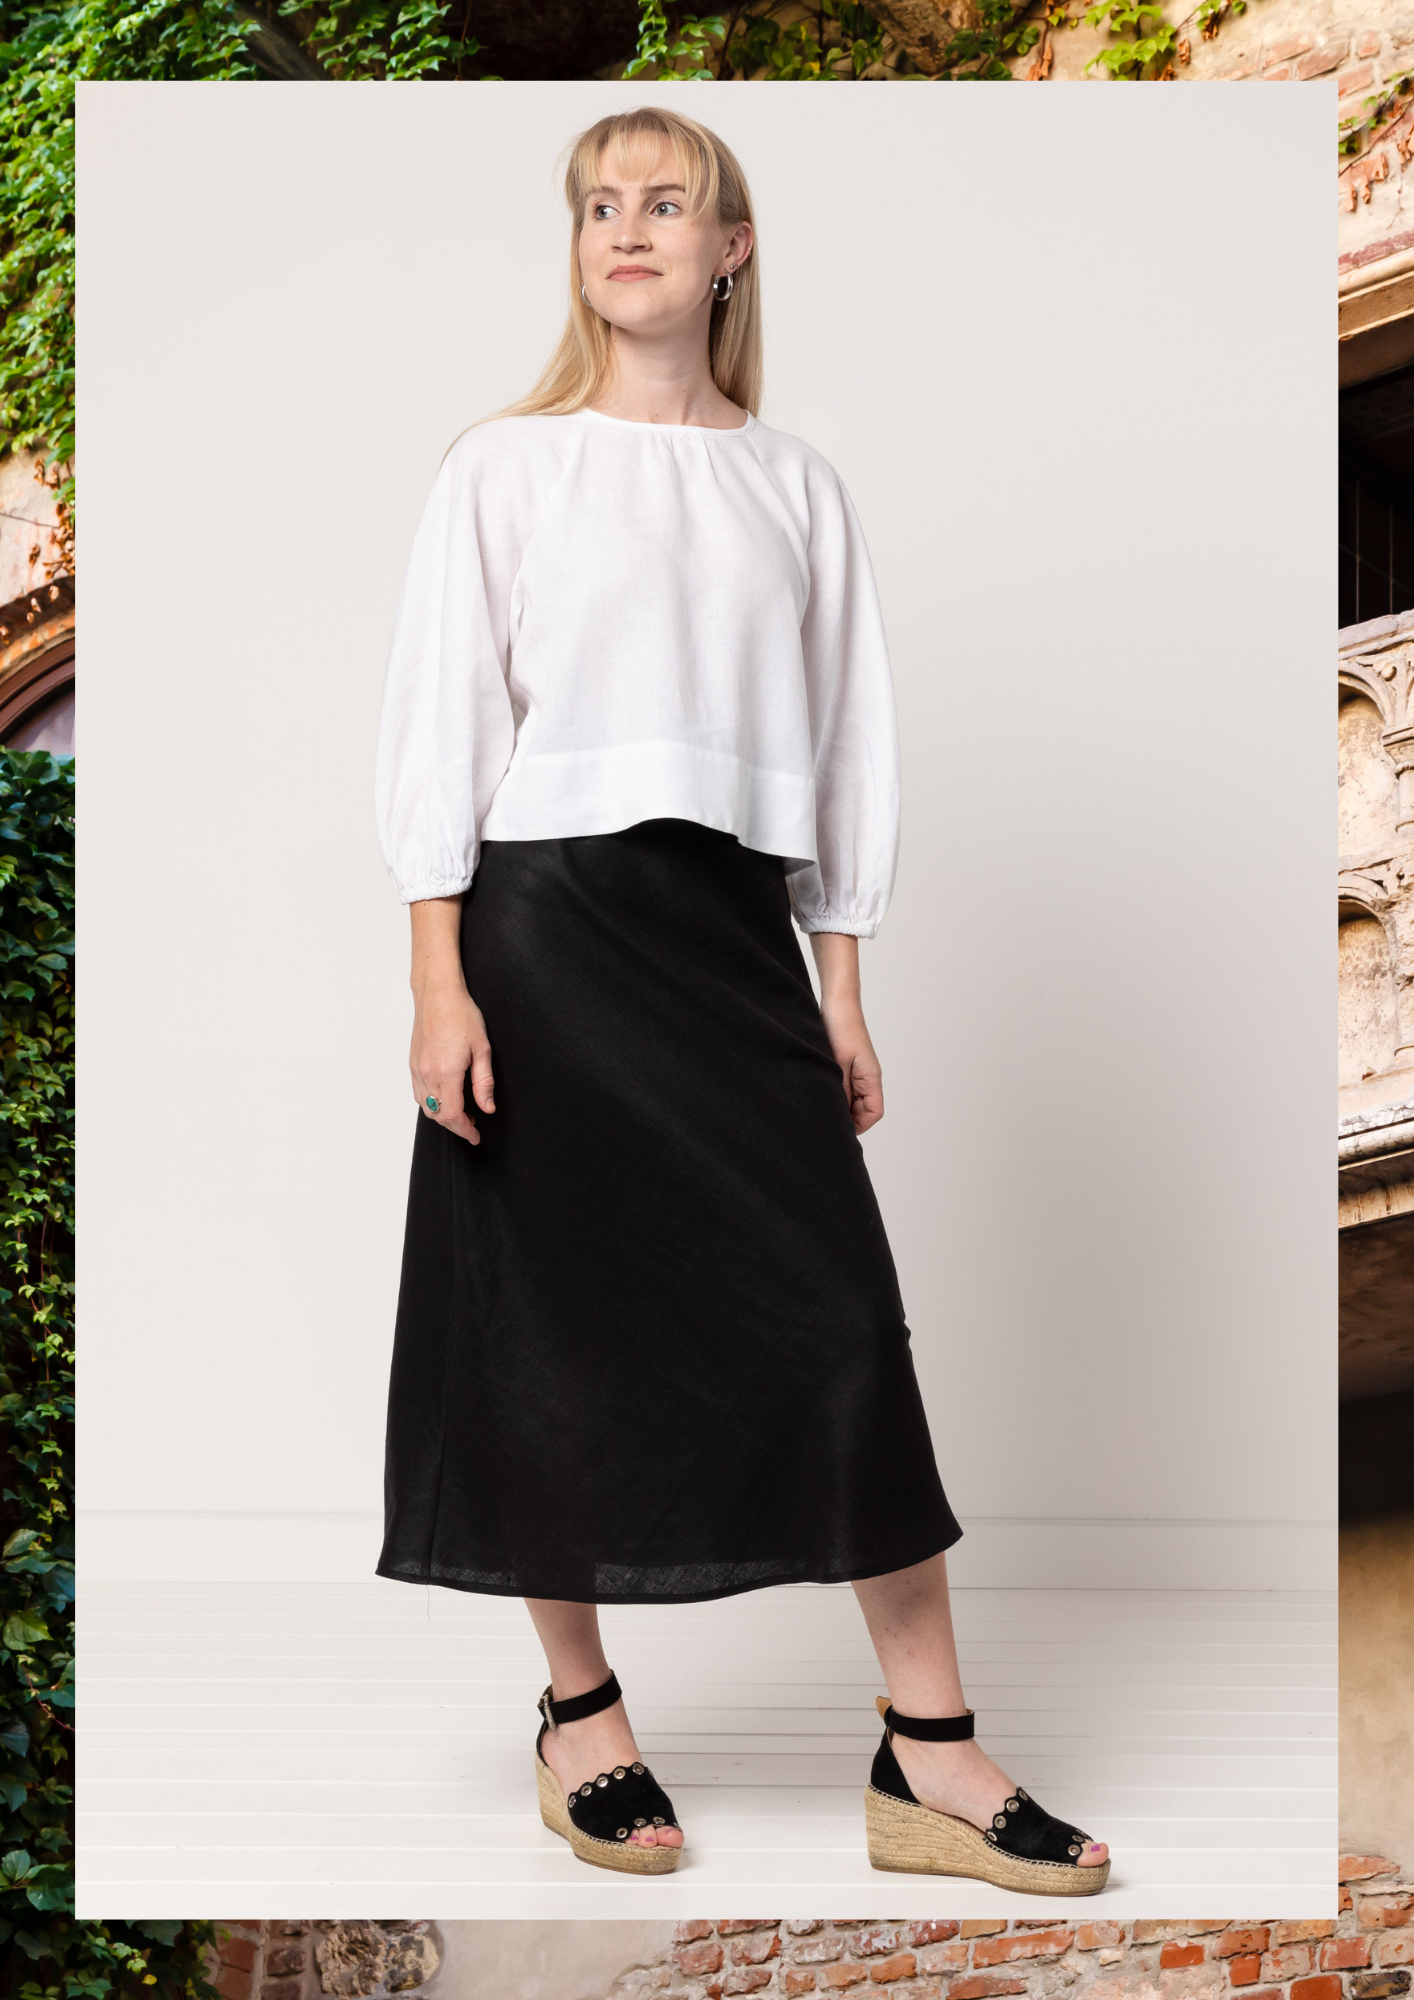 New Pattern Bundles - Verona Woven Top & Genoa Bias Cut Skirt 